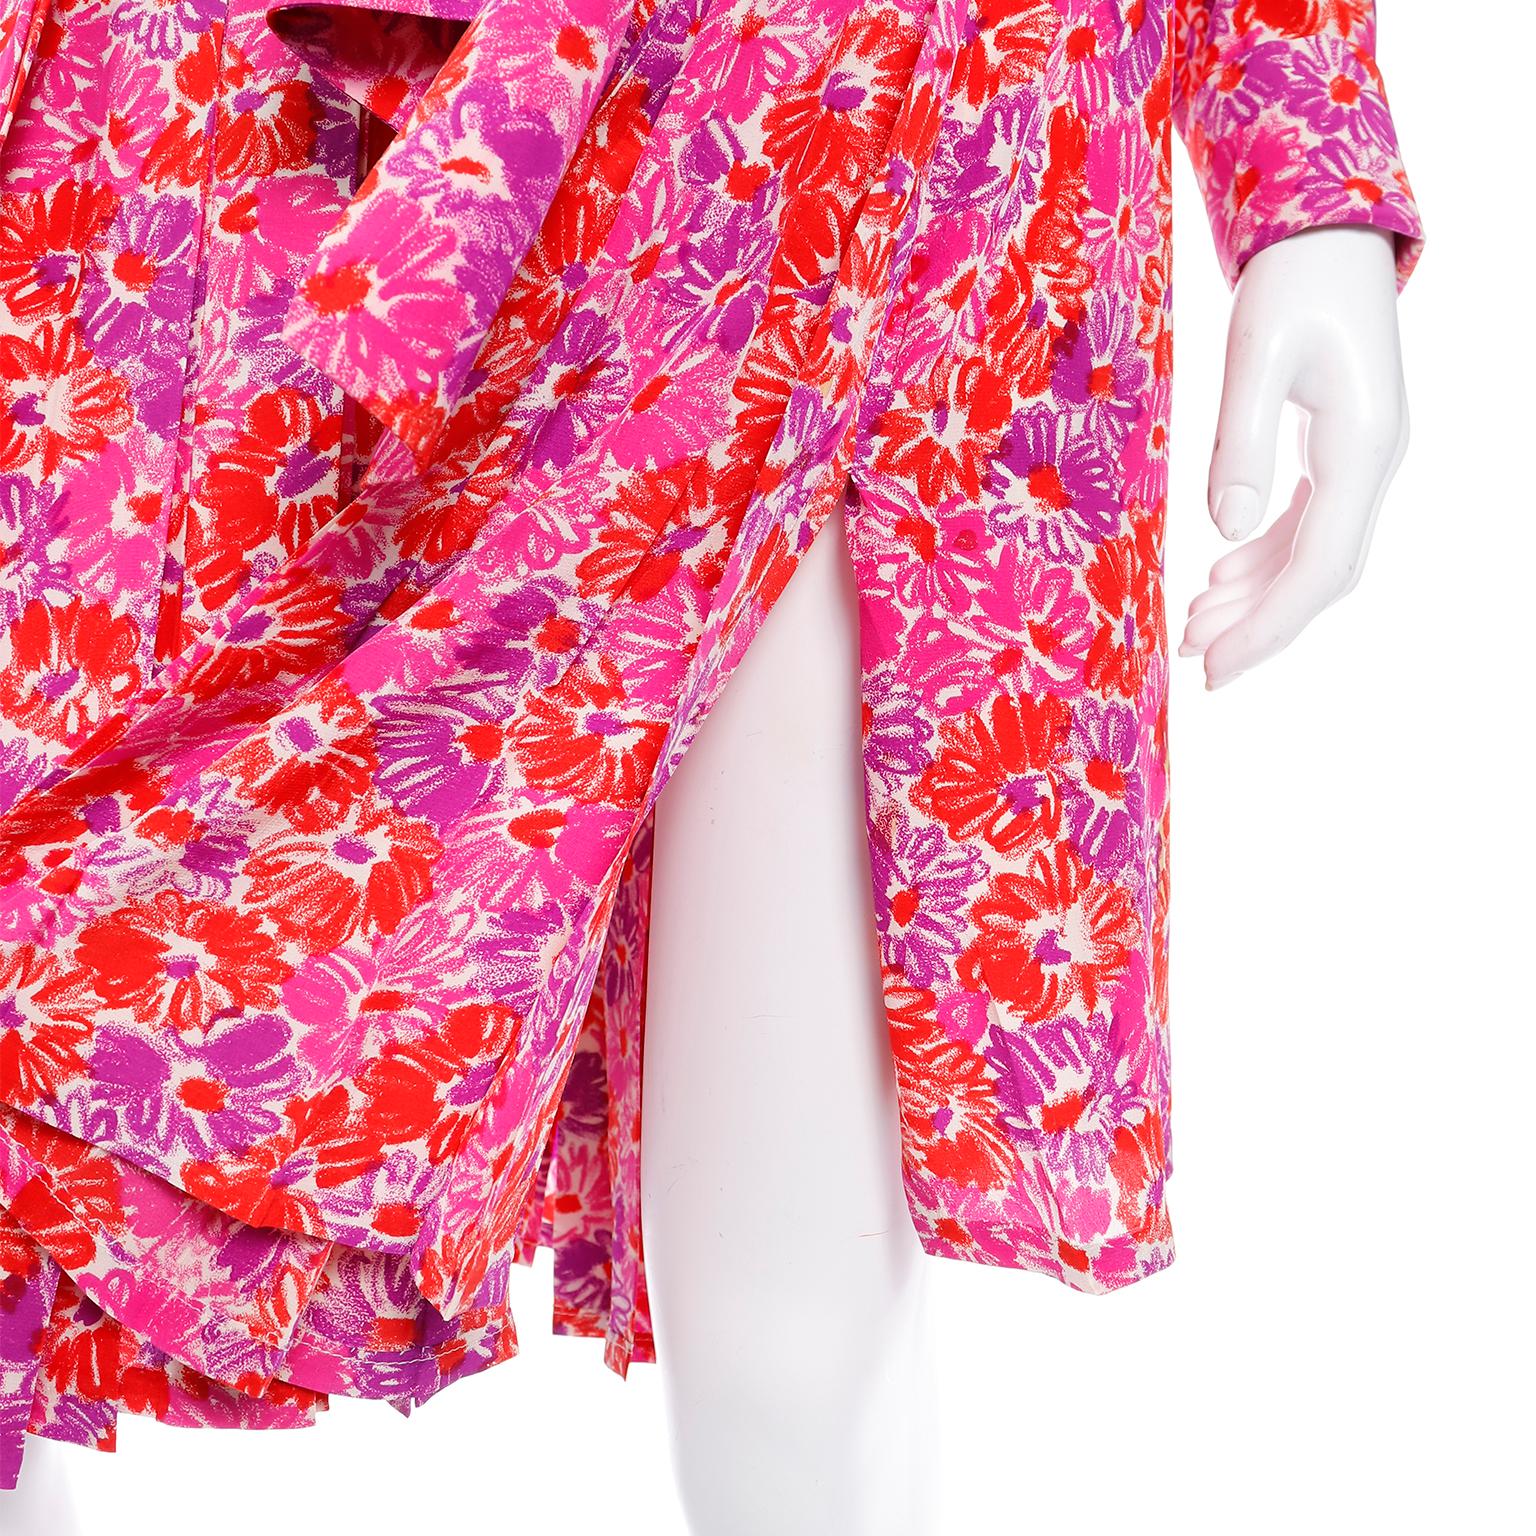 Yves Saint Laurent S/S 1989 Vintage Colorful Pink Floral Silk YSL Runway Dress For Sale 7